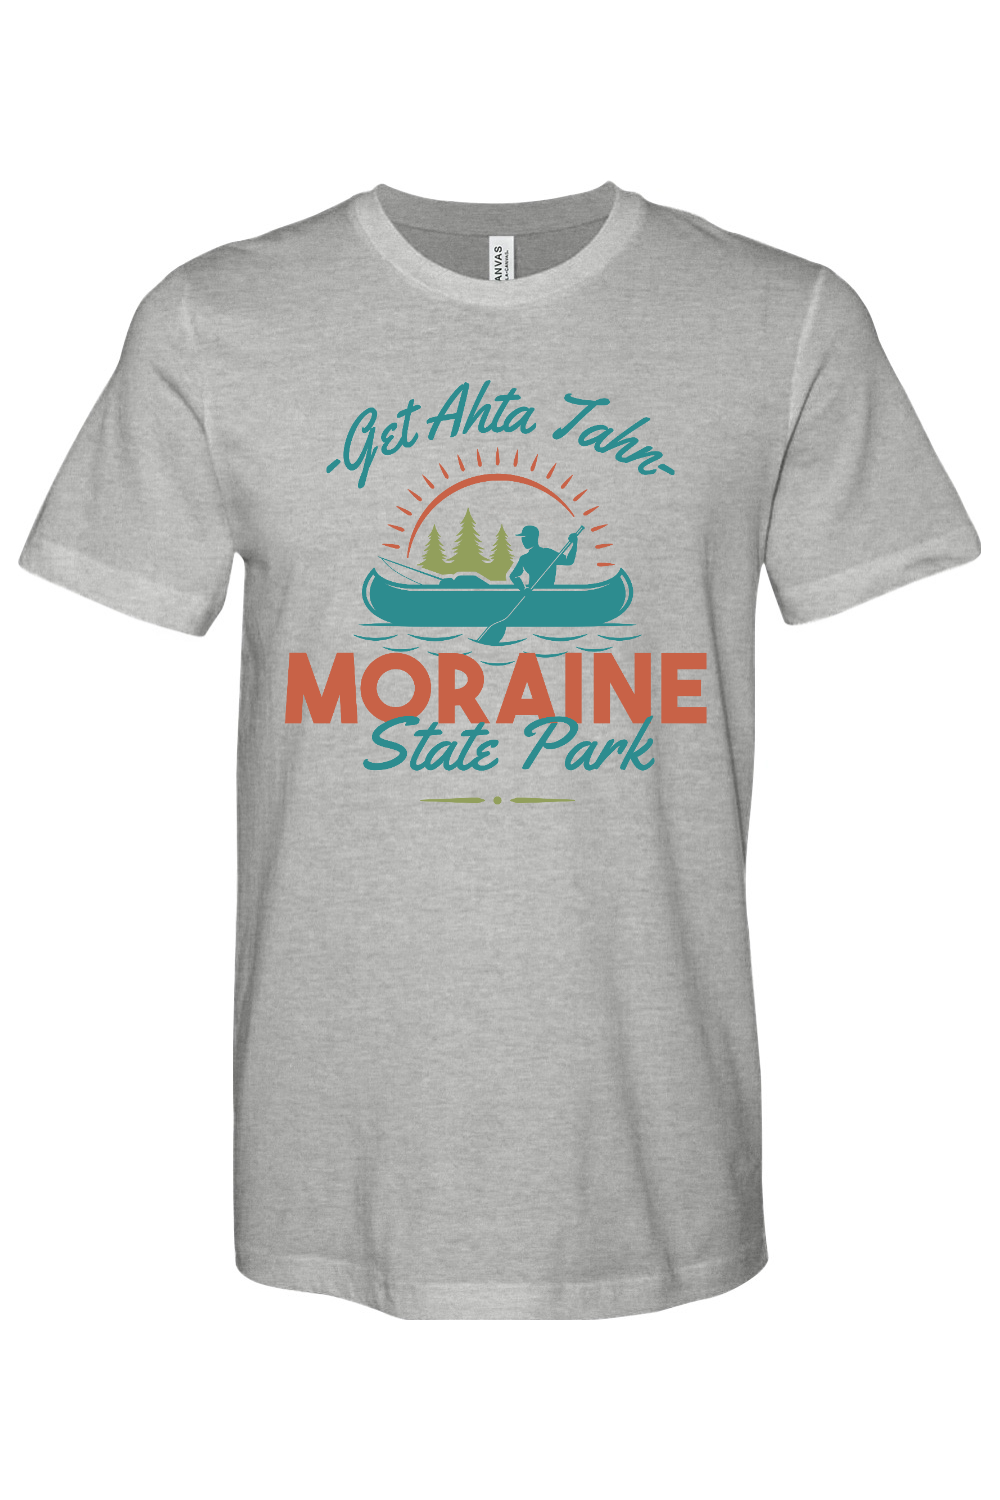 Moraine State Park - Get Ahta Tahn! - Yinzylvania